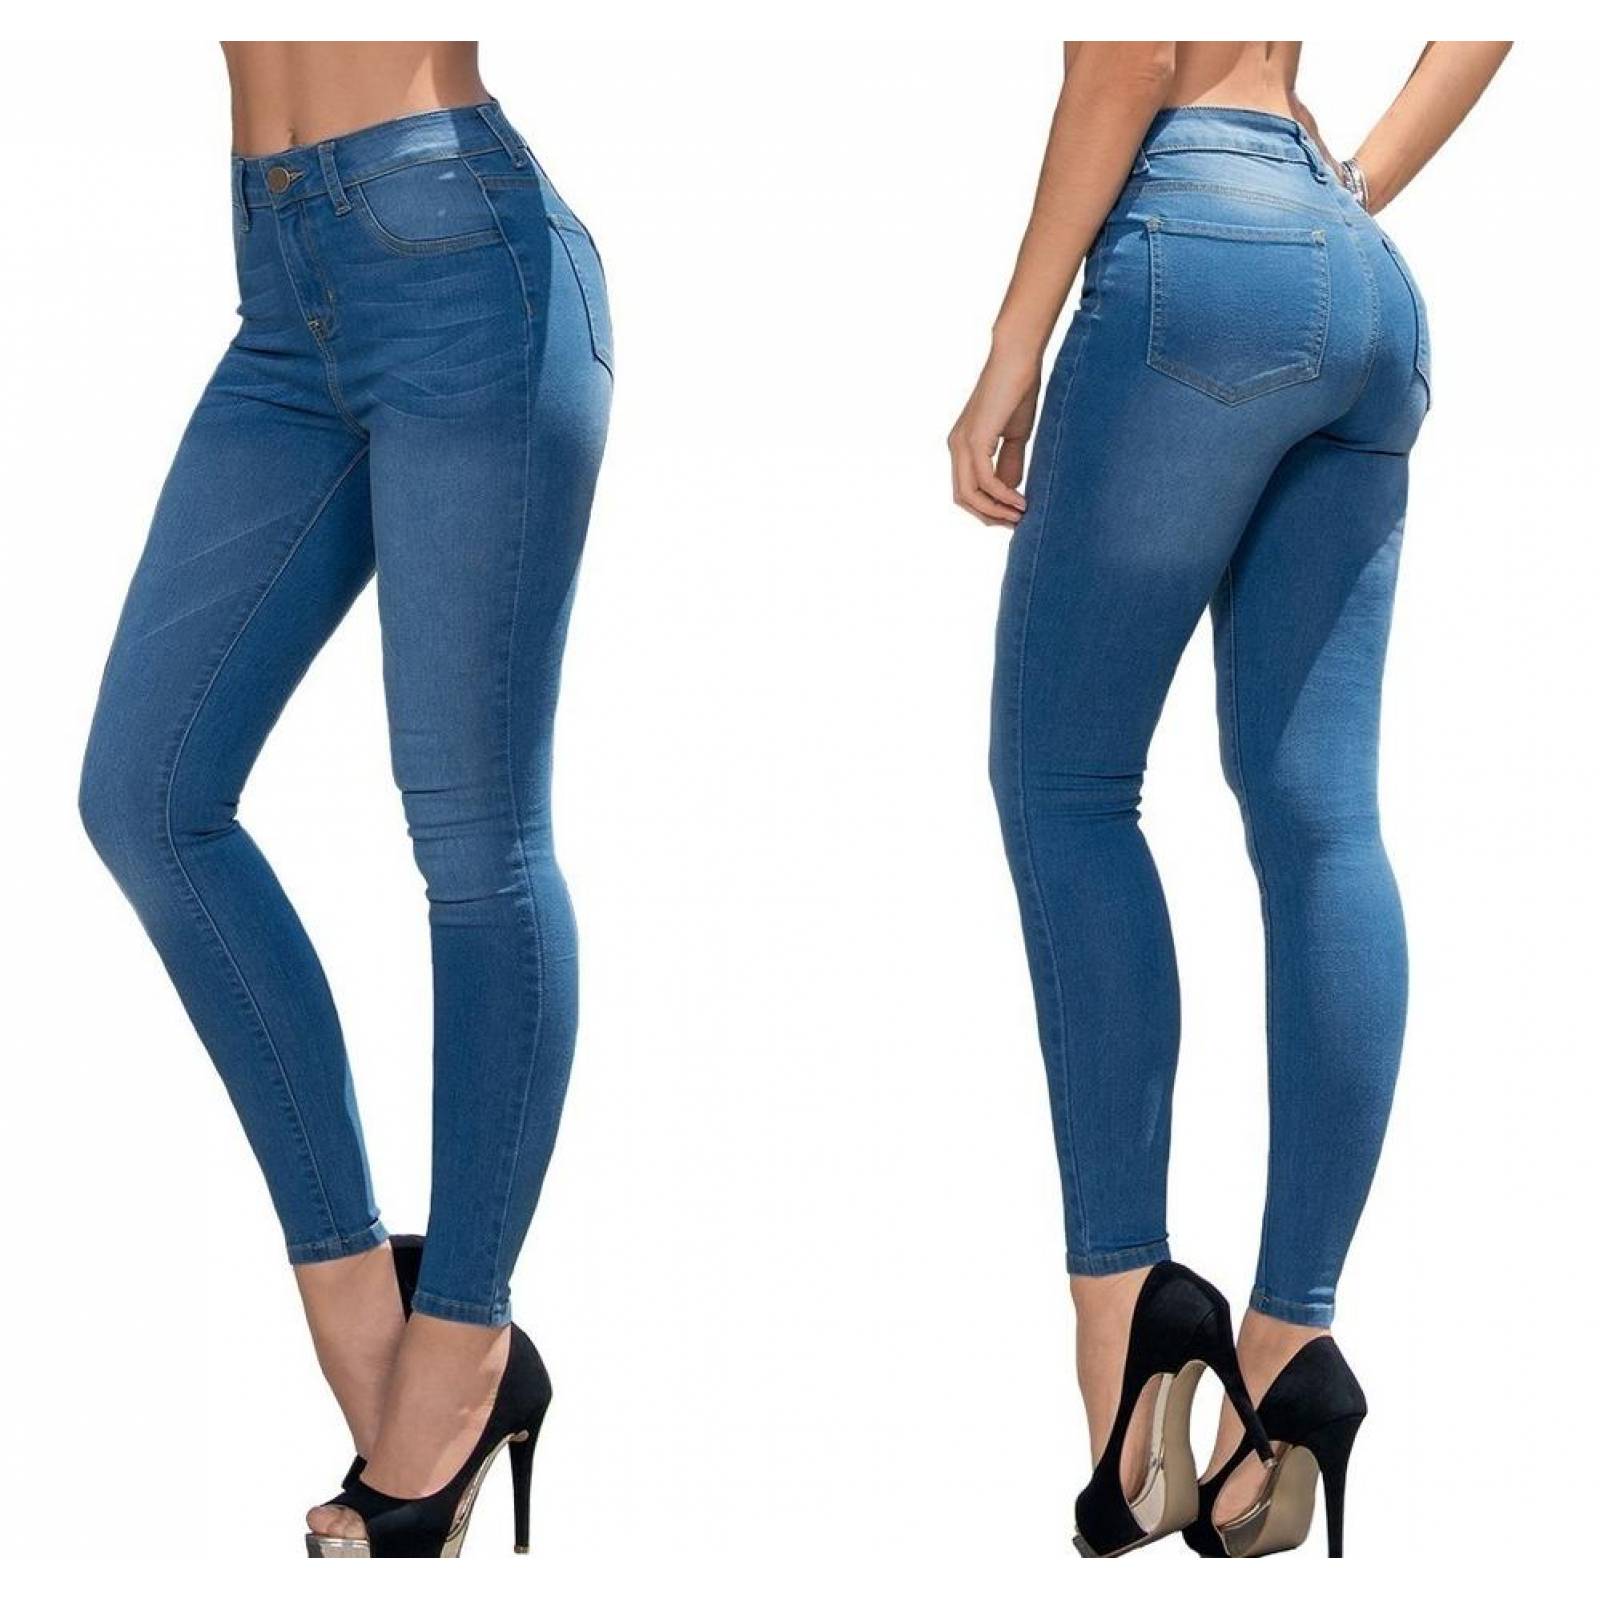 Pantalon Jeans Dama Mujer Mezclilla Azul Ajustado Skinny